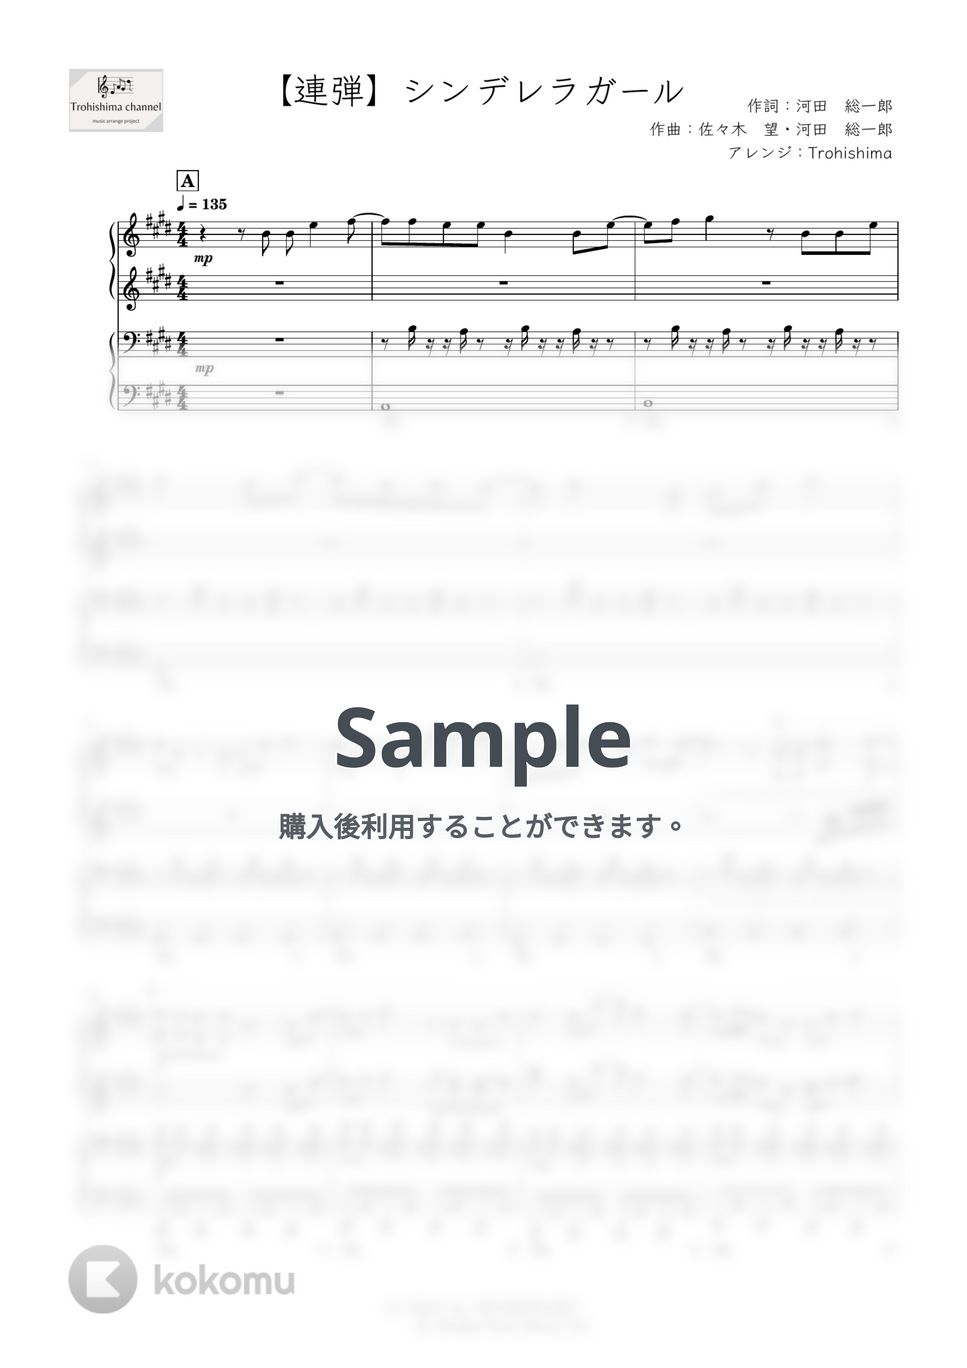 King & Prince - シンデレラガール (ピアノ連弾) by Trohishima